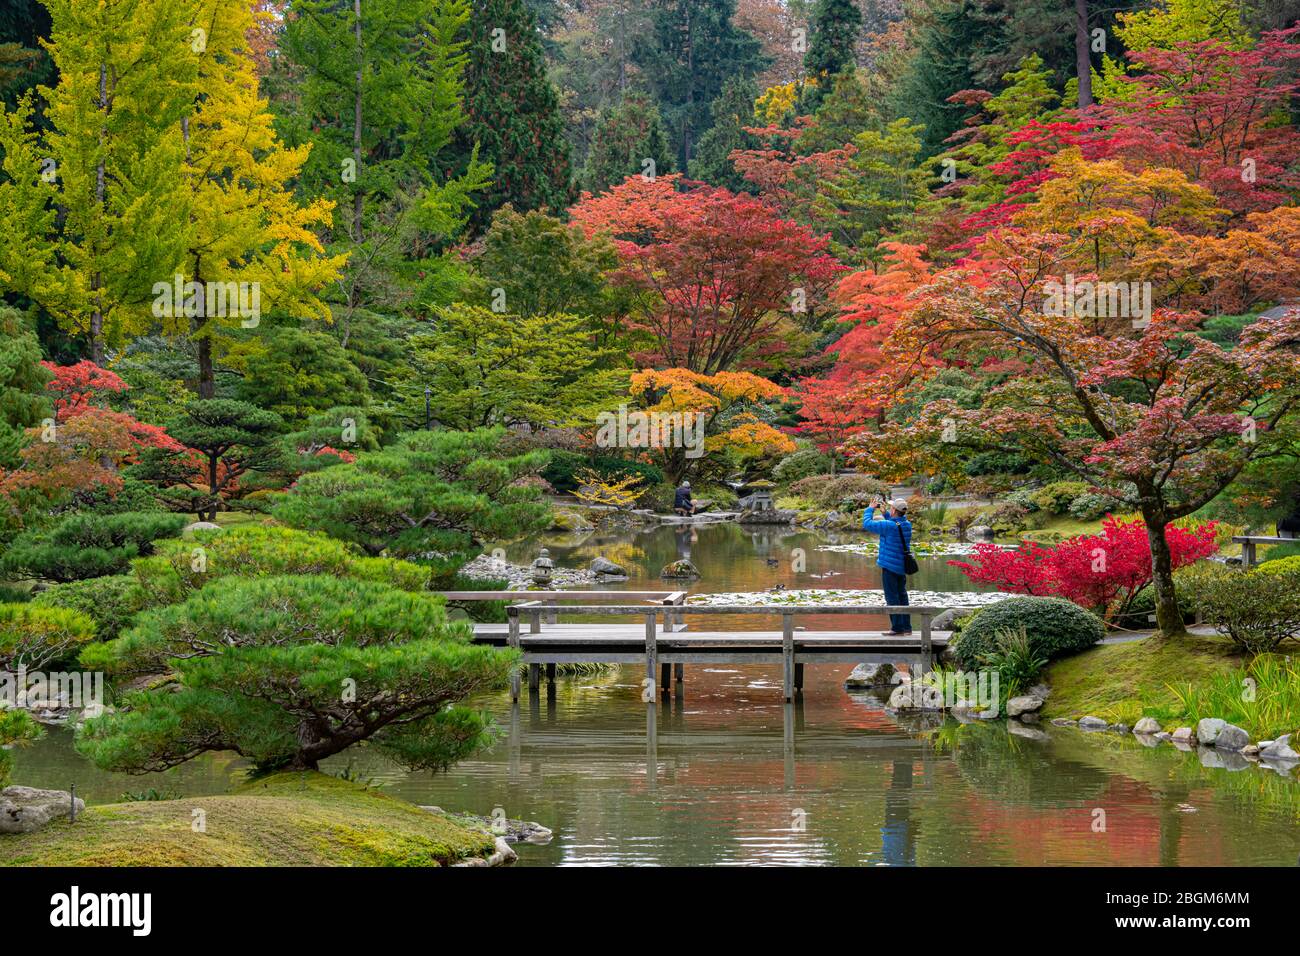 Fall Foliage Photography in a Japanese Garden Stock Photo